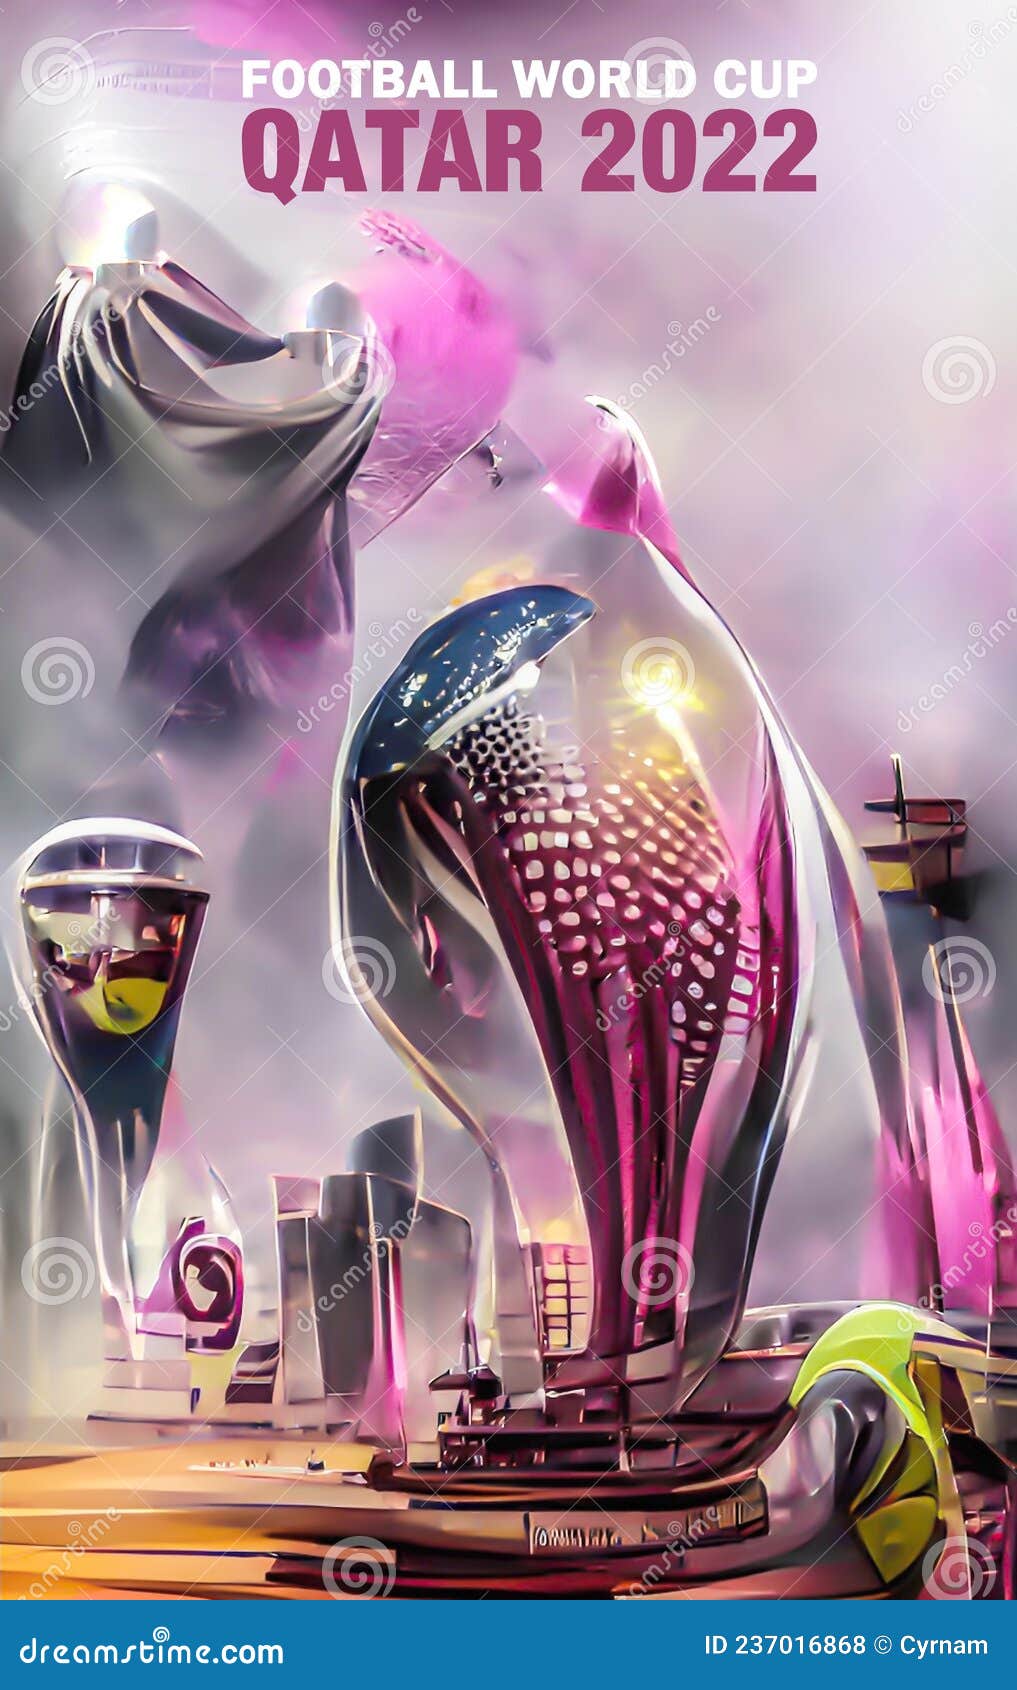 presentation about qatar world cup